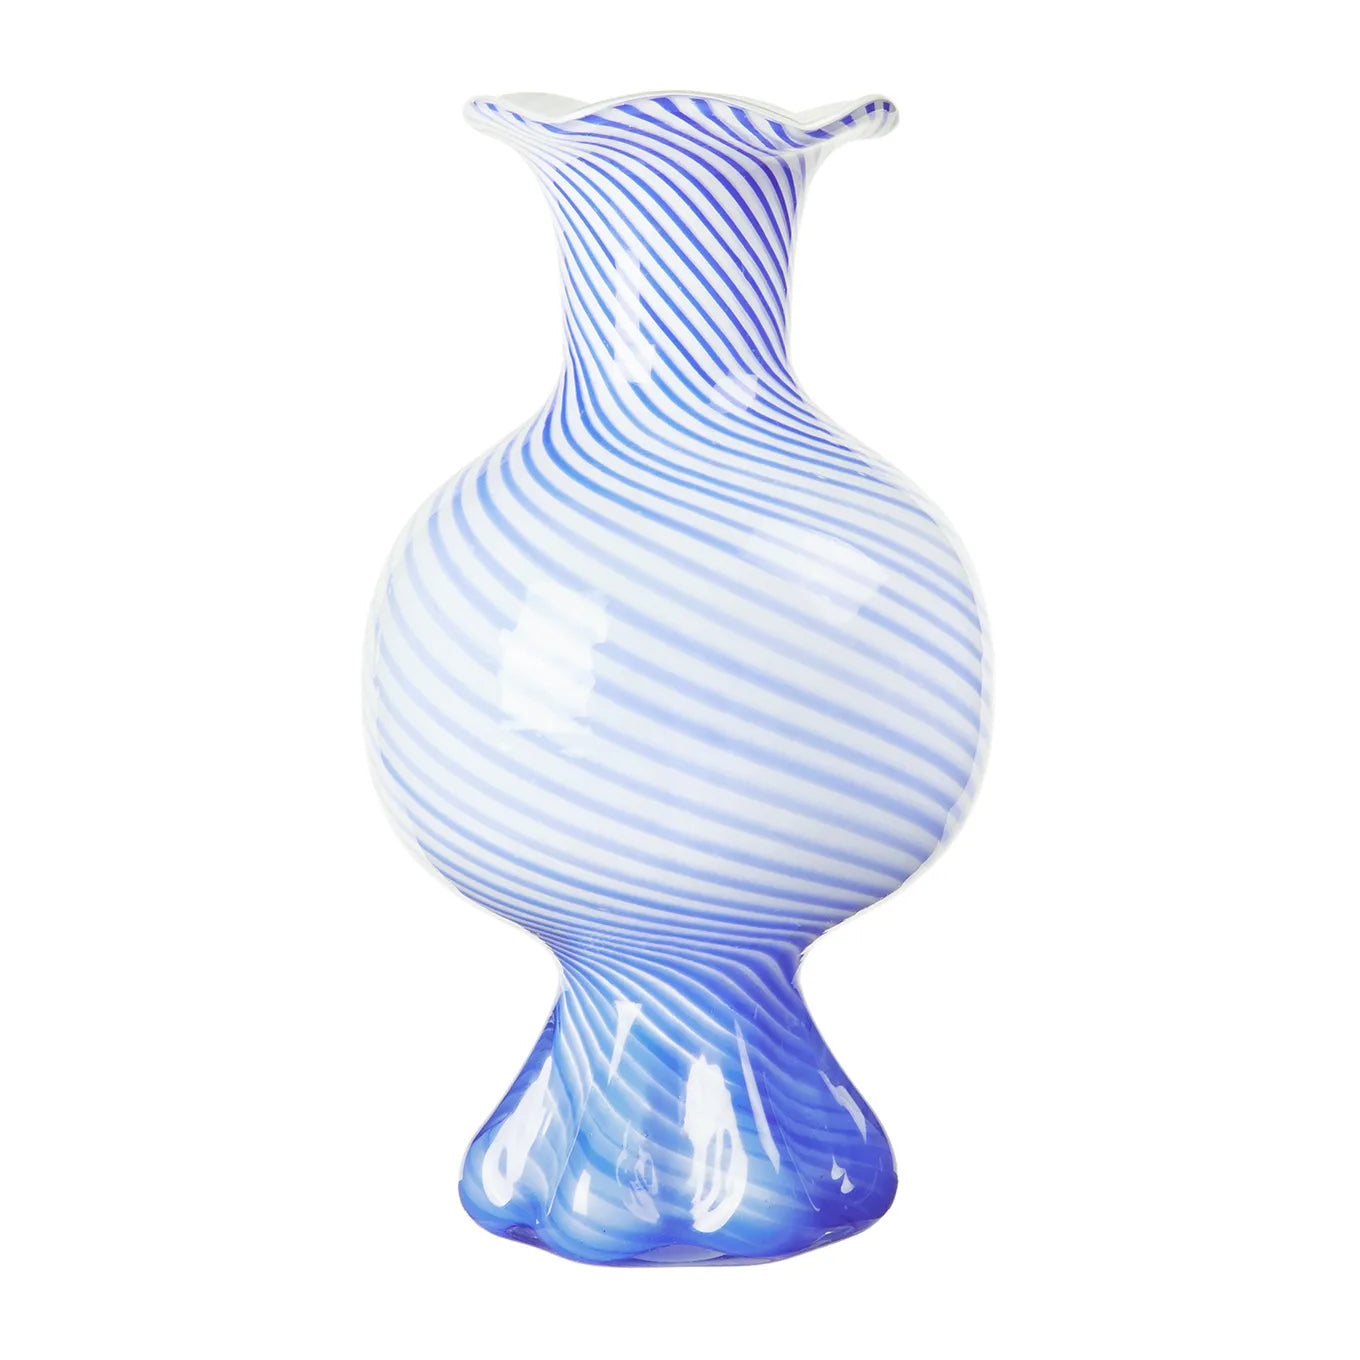 Mella vas 30 cm Intense blue-off white